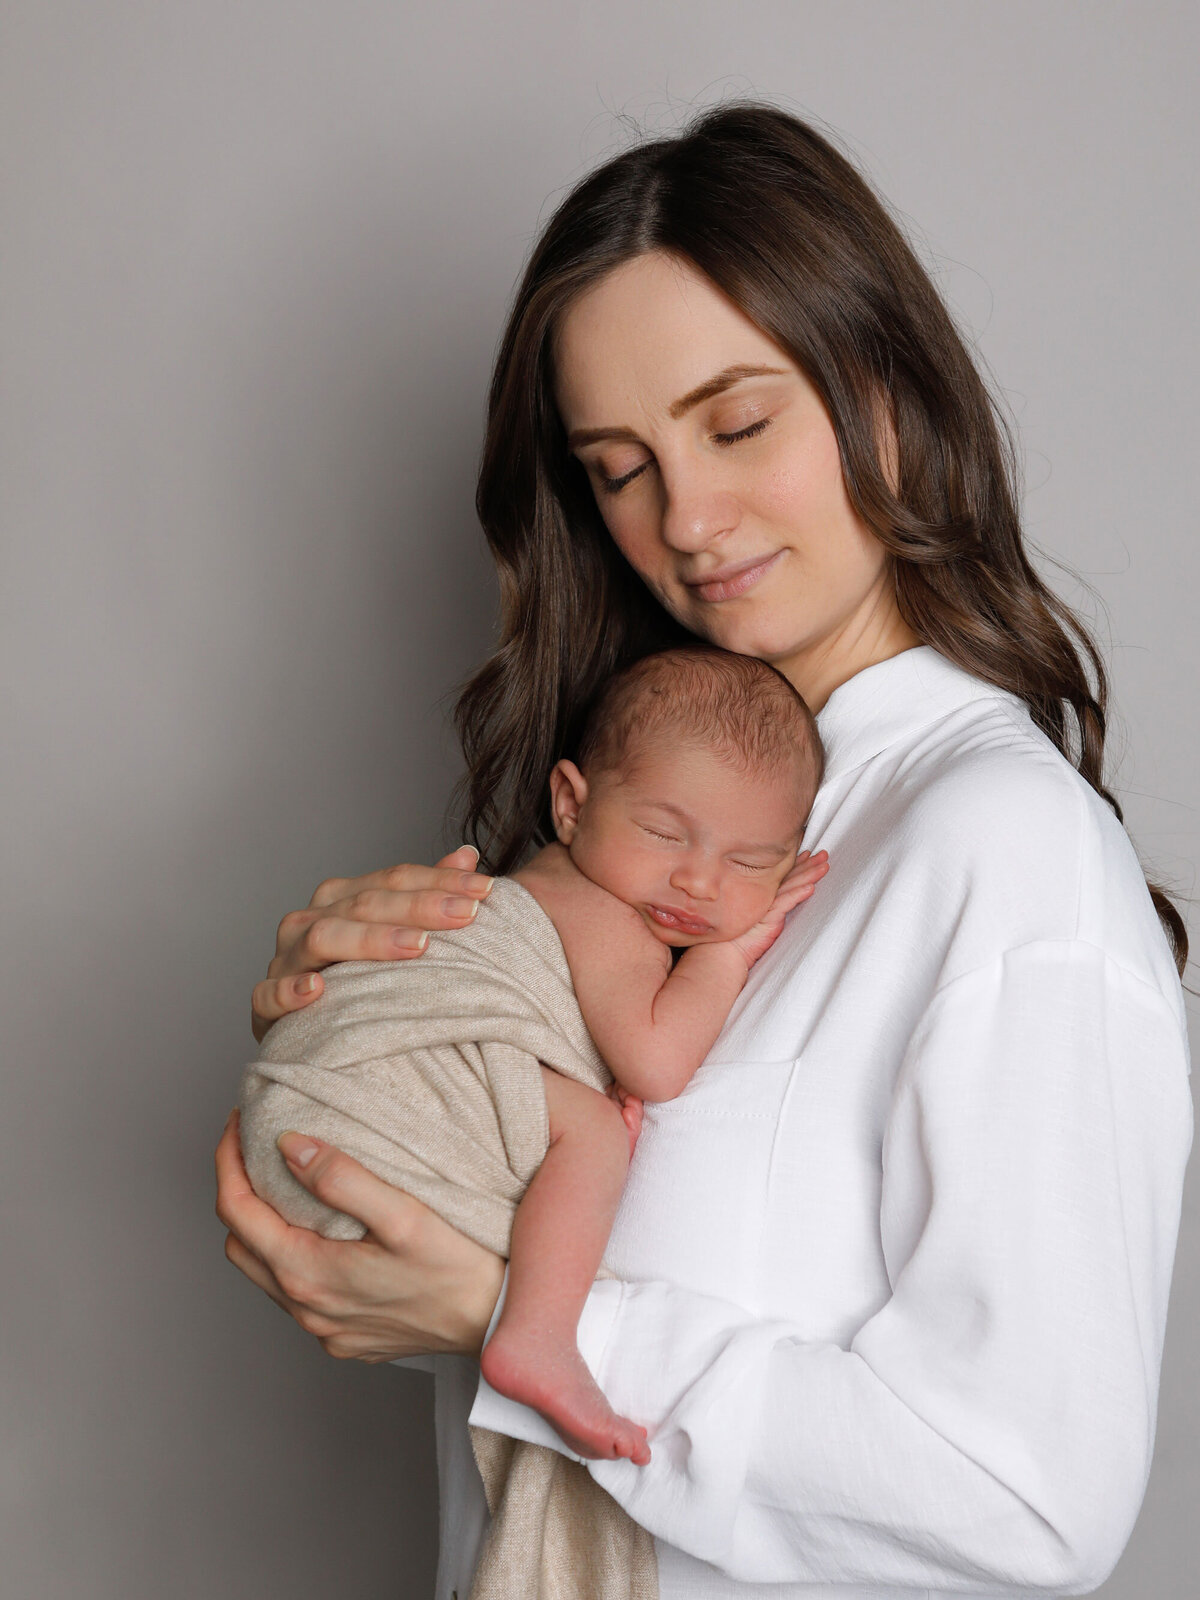 Newborn-photography-session-newborn-in-mothers-arms-,-newborn-photo,-photo-taken-by-Janina-Botha-photographer-in-Oakville-Ontario